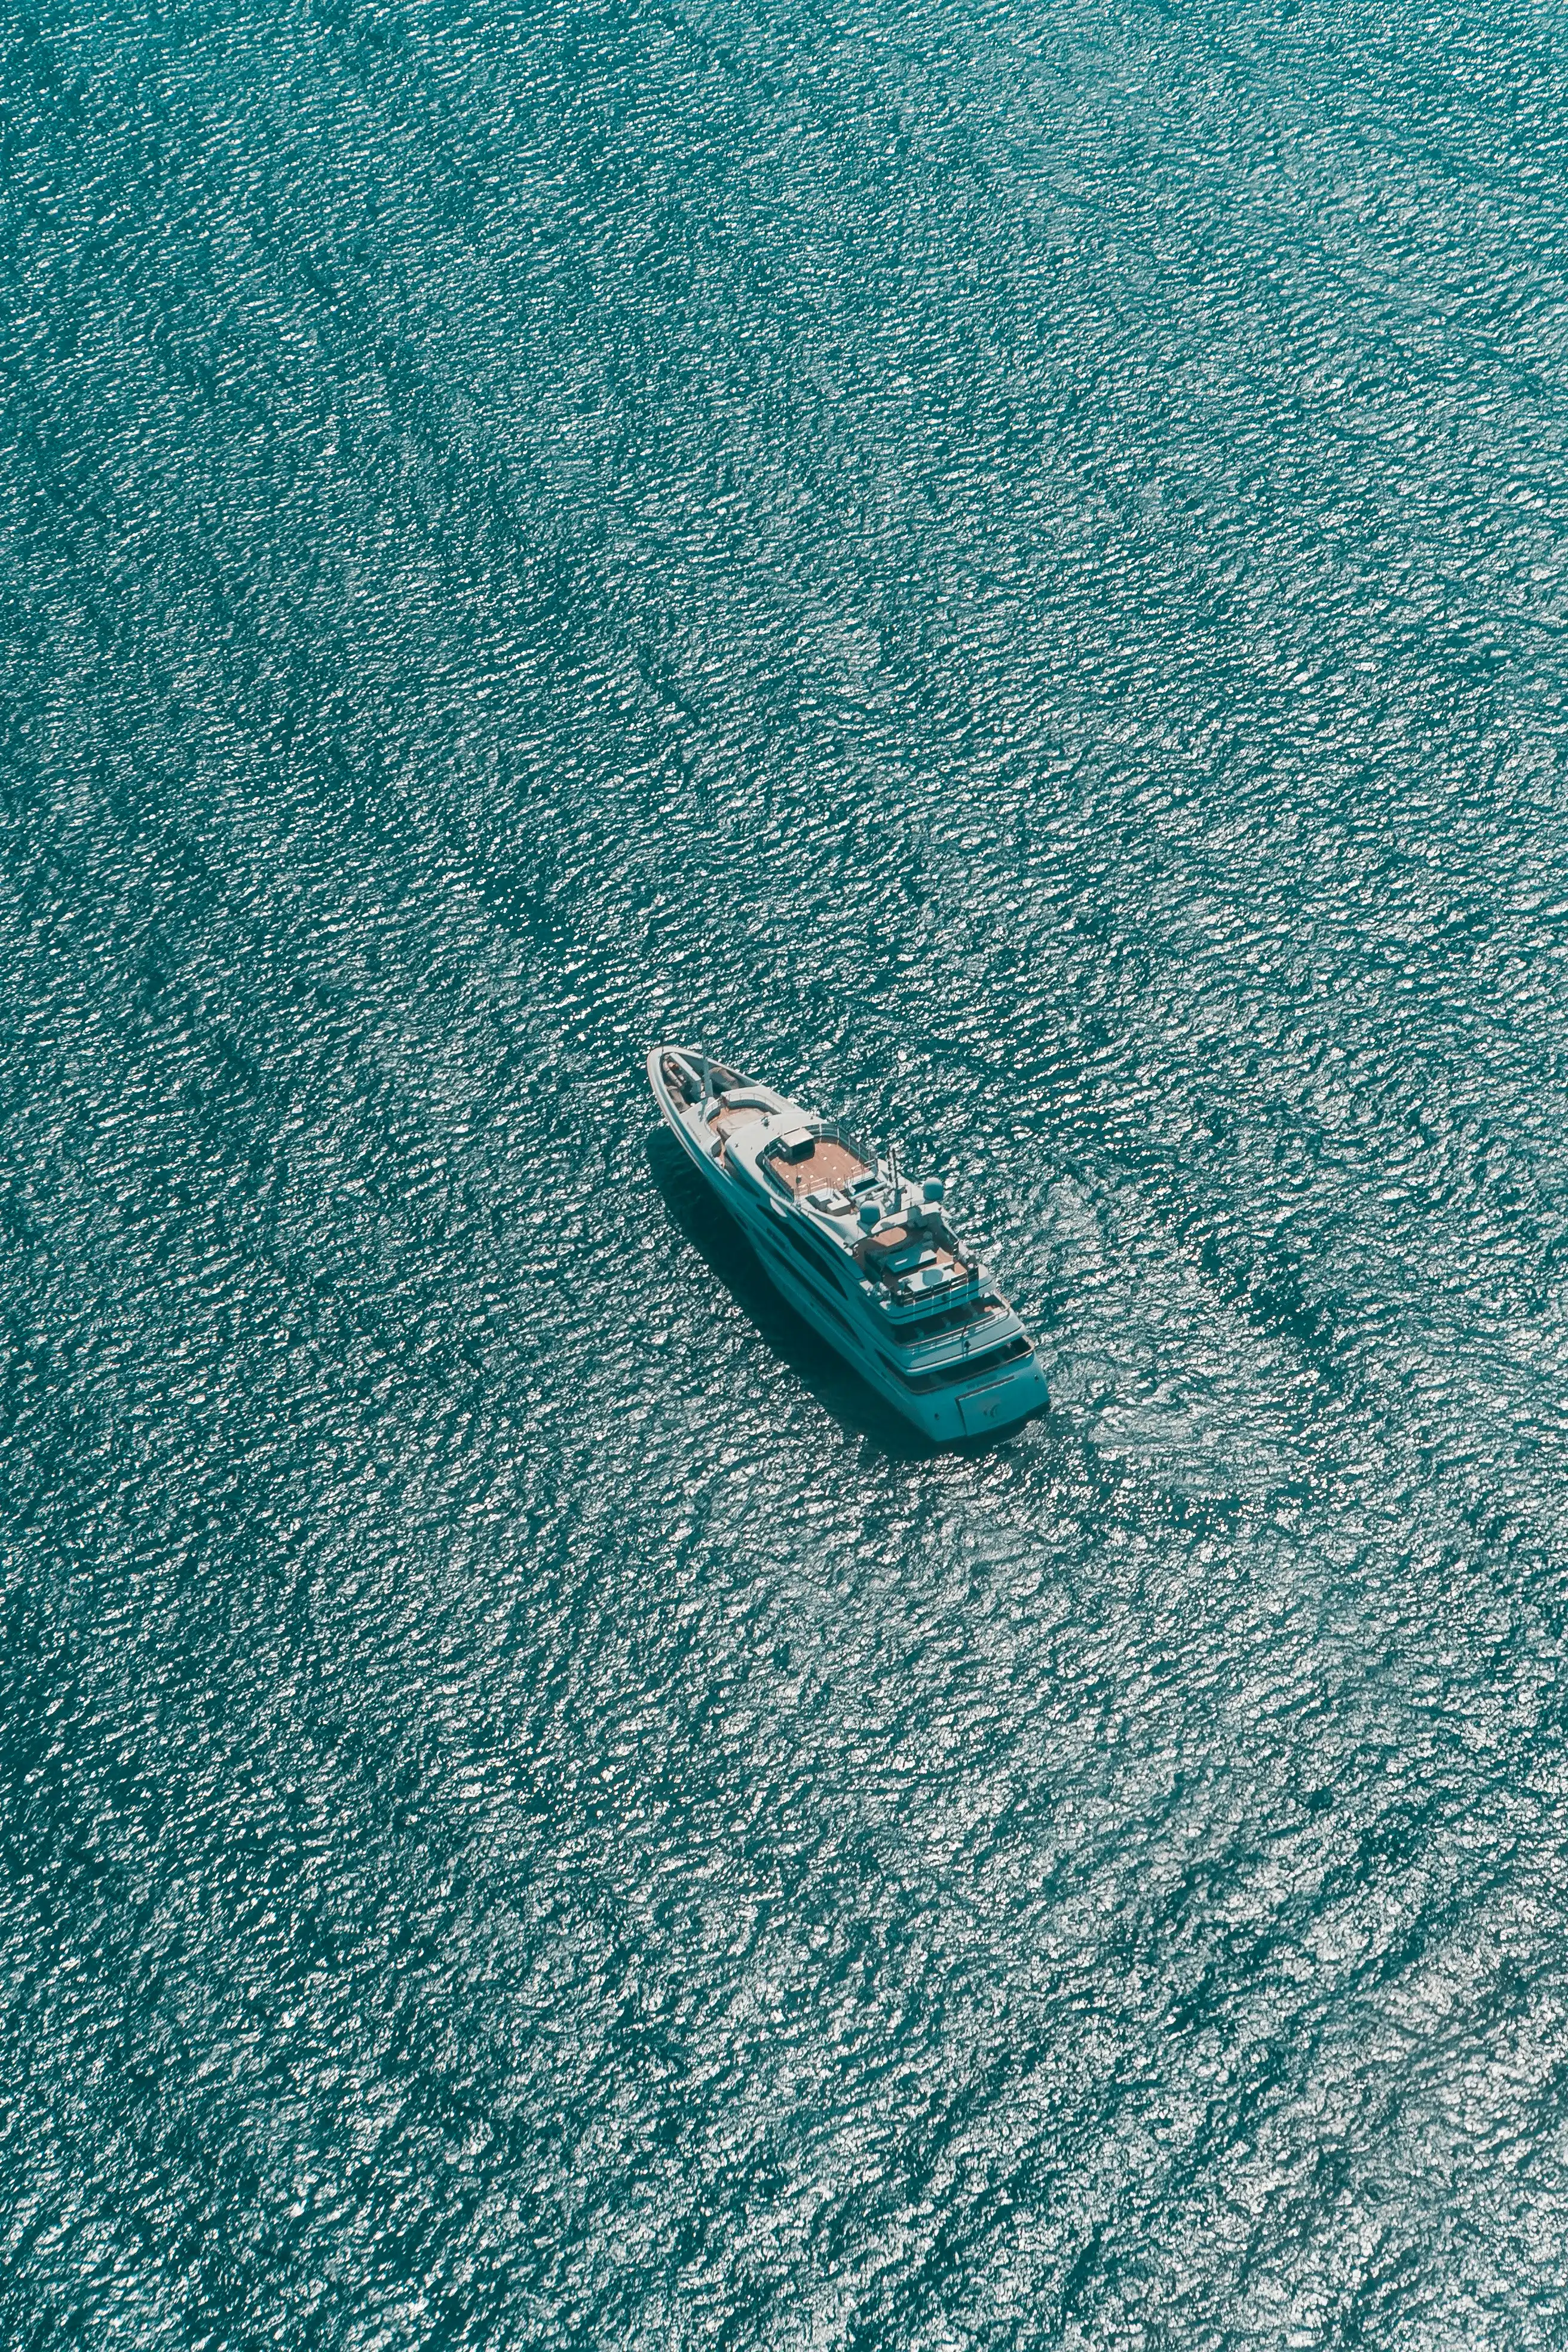 Aerial view of a superyacht off the coast of Dubai